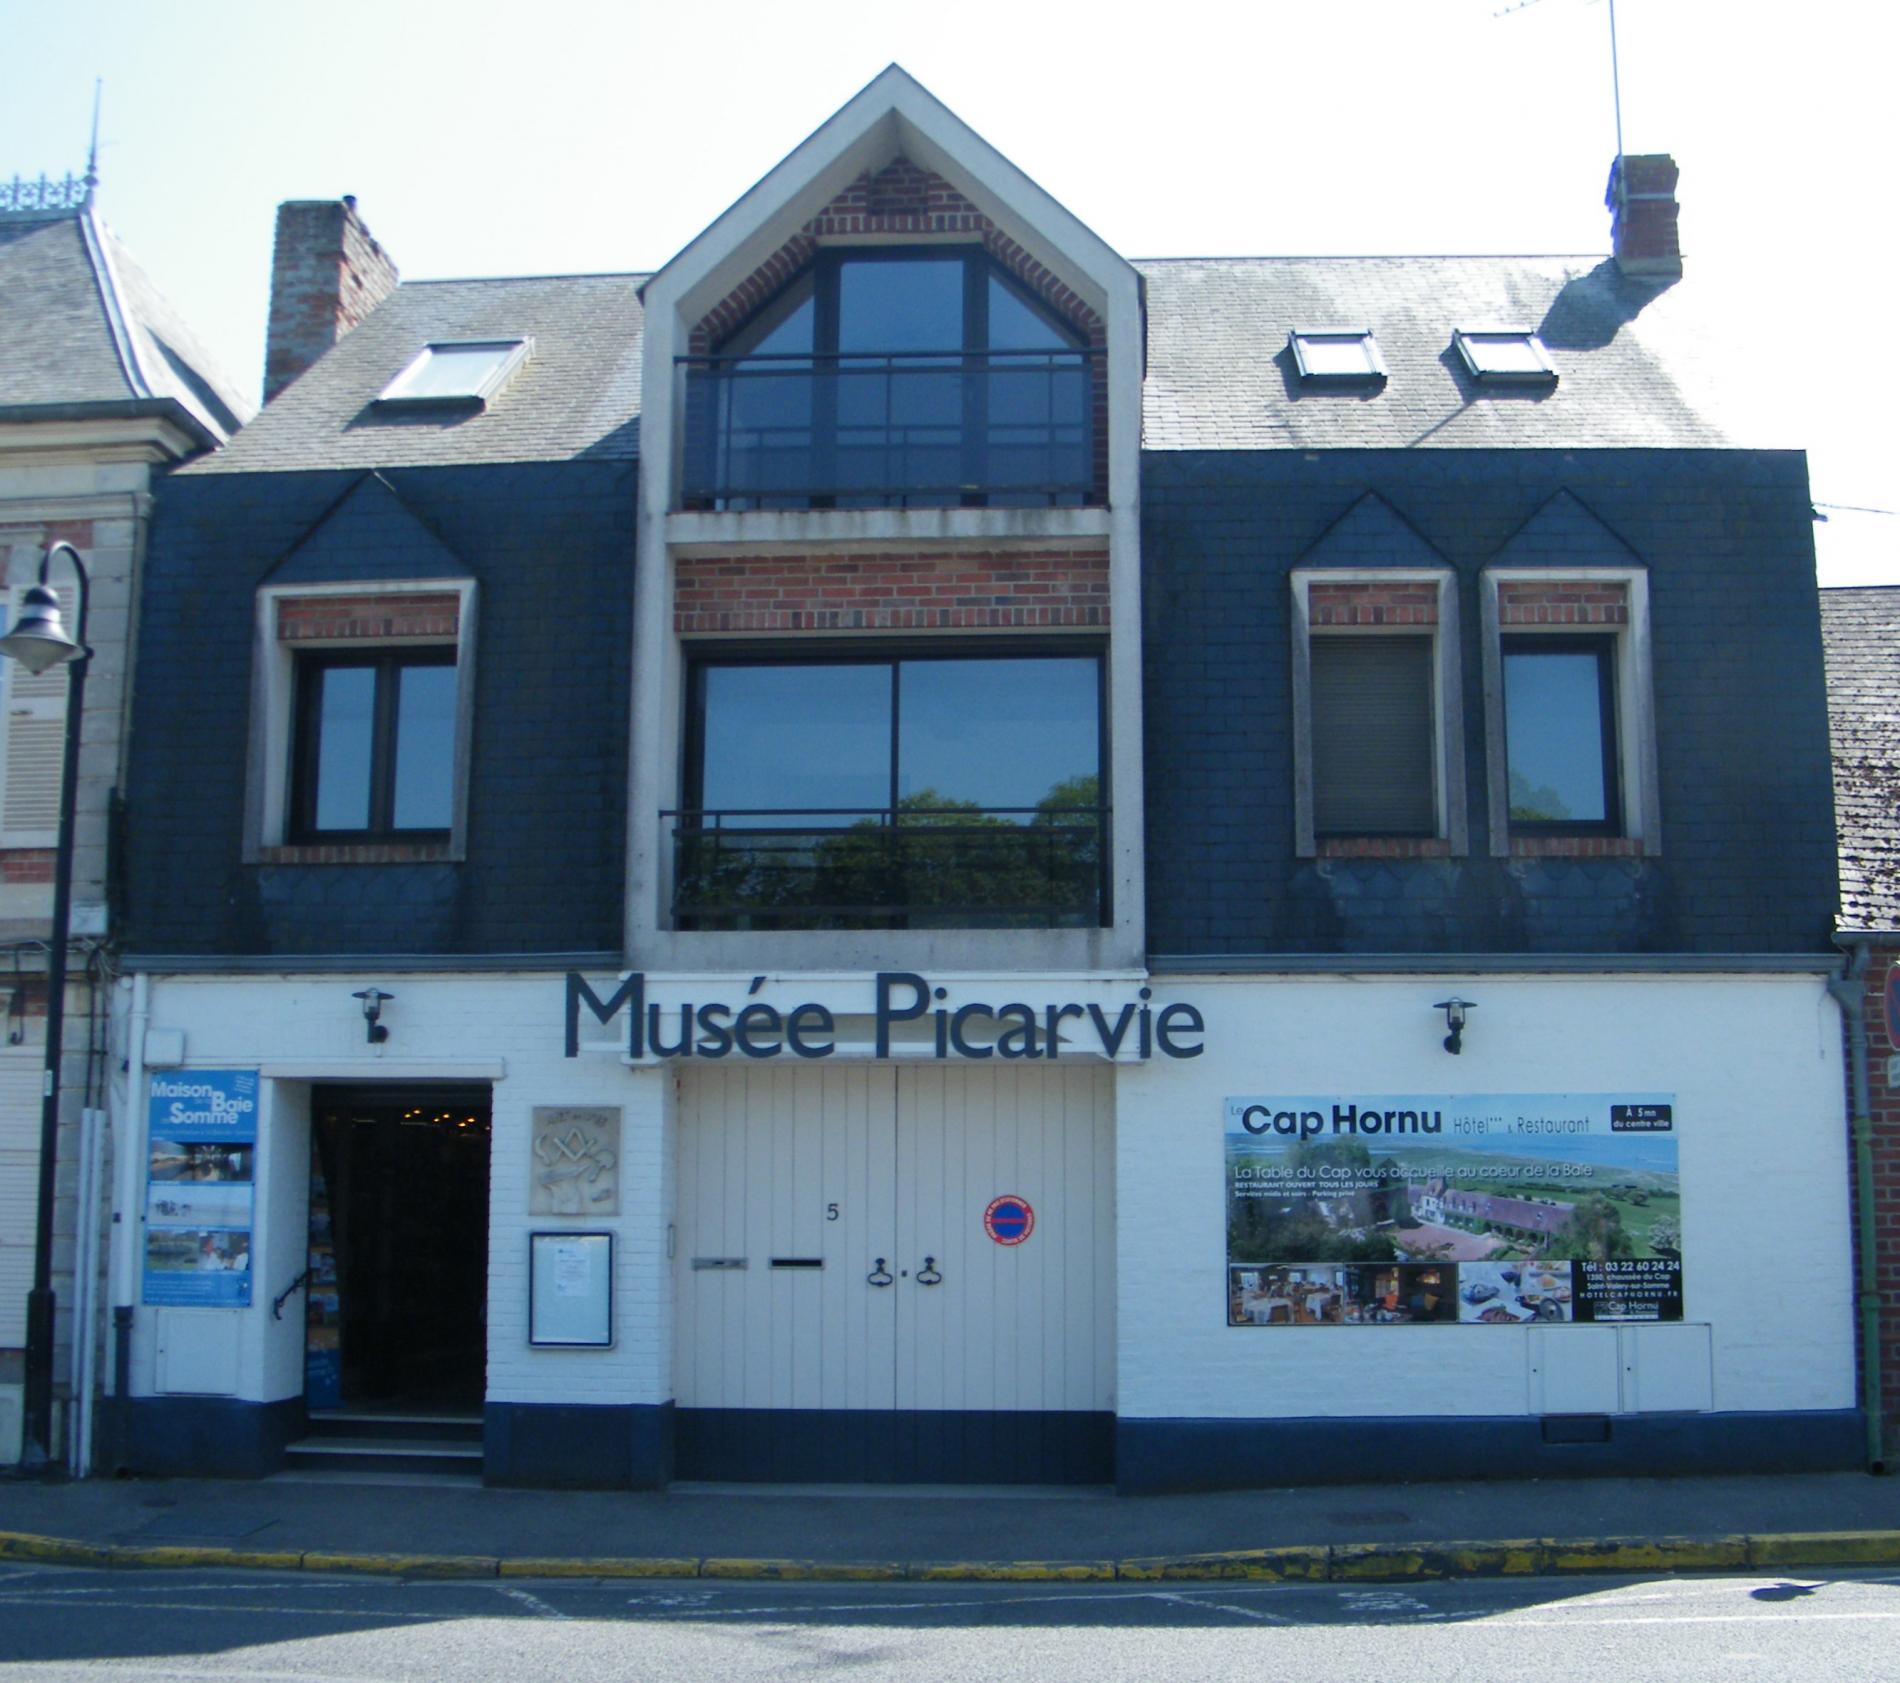 Picarvie Museum